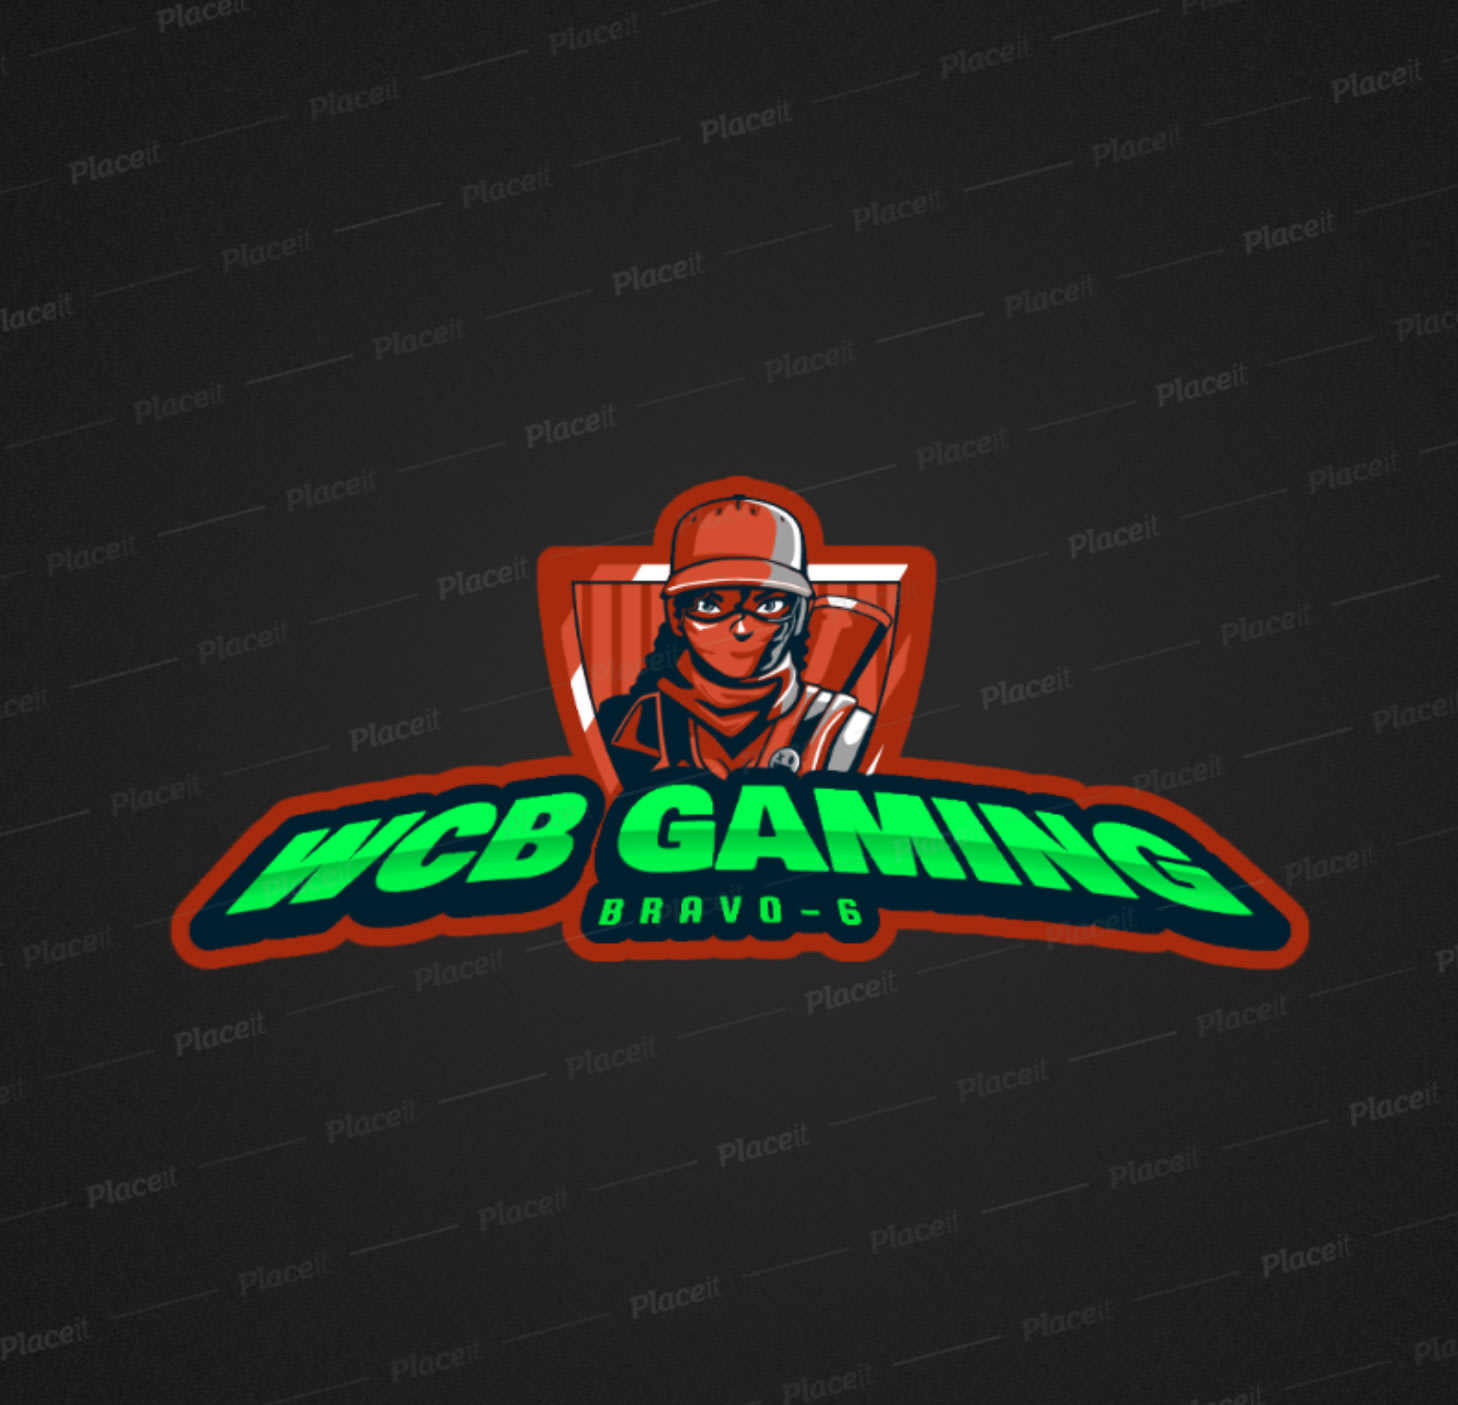 Wcb Gaming